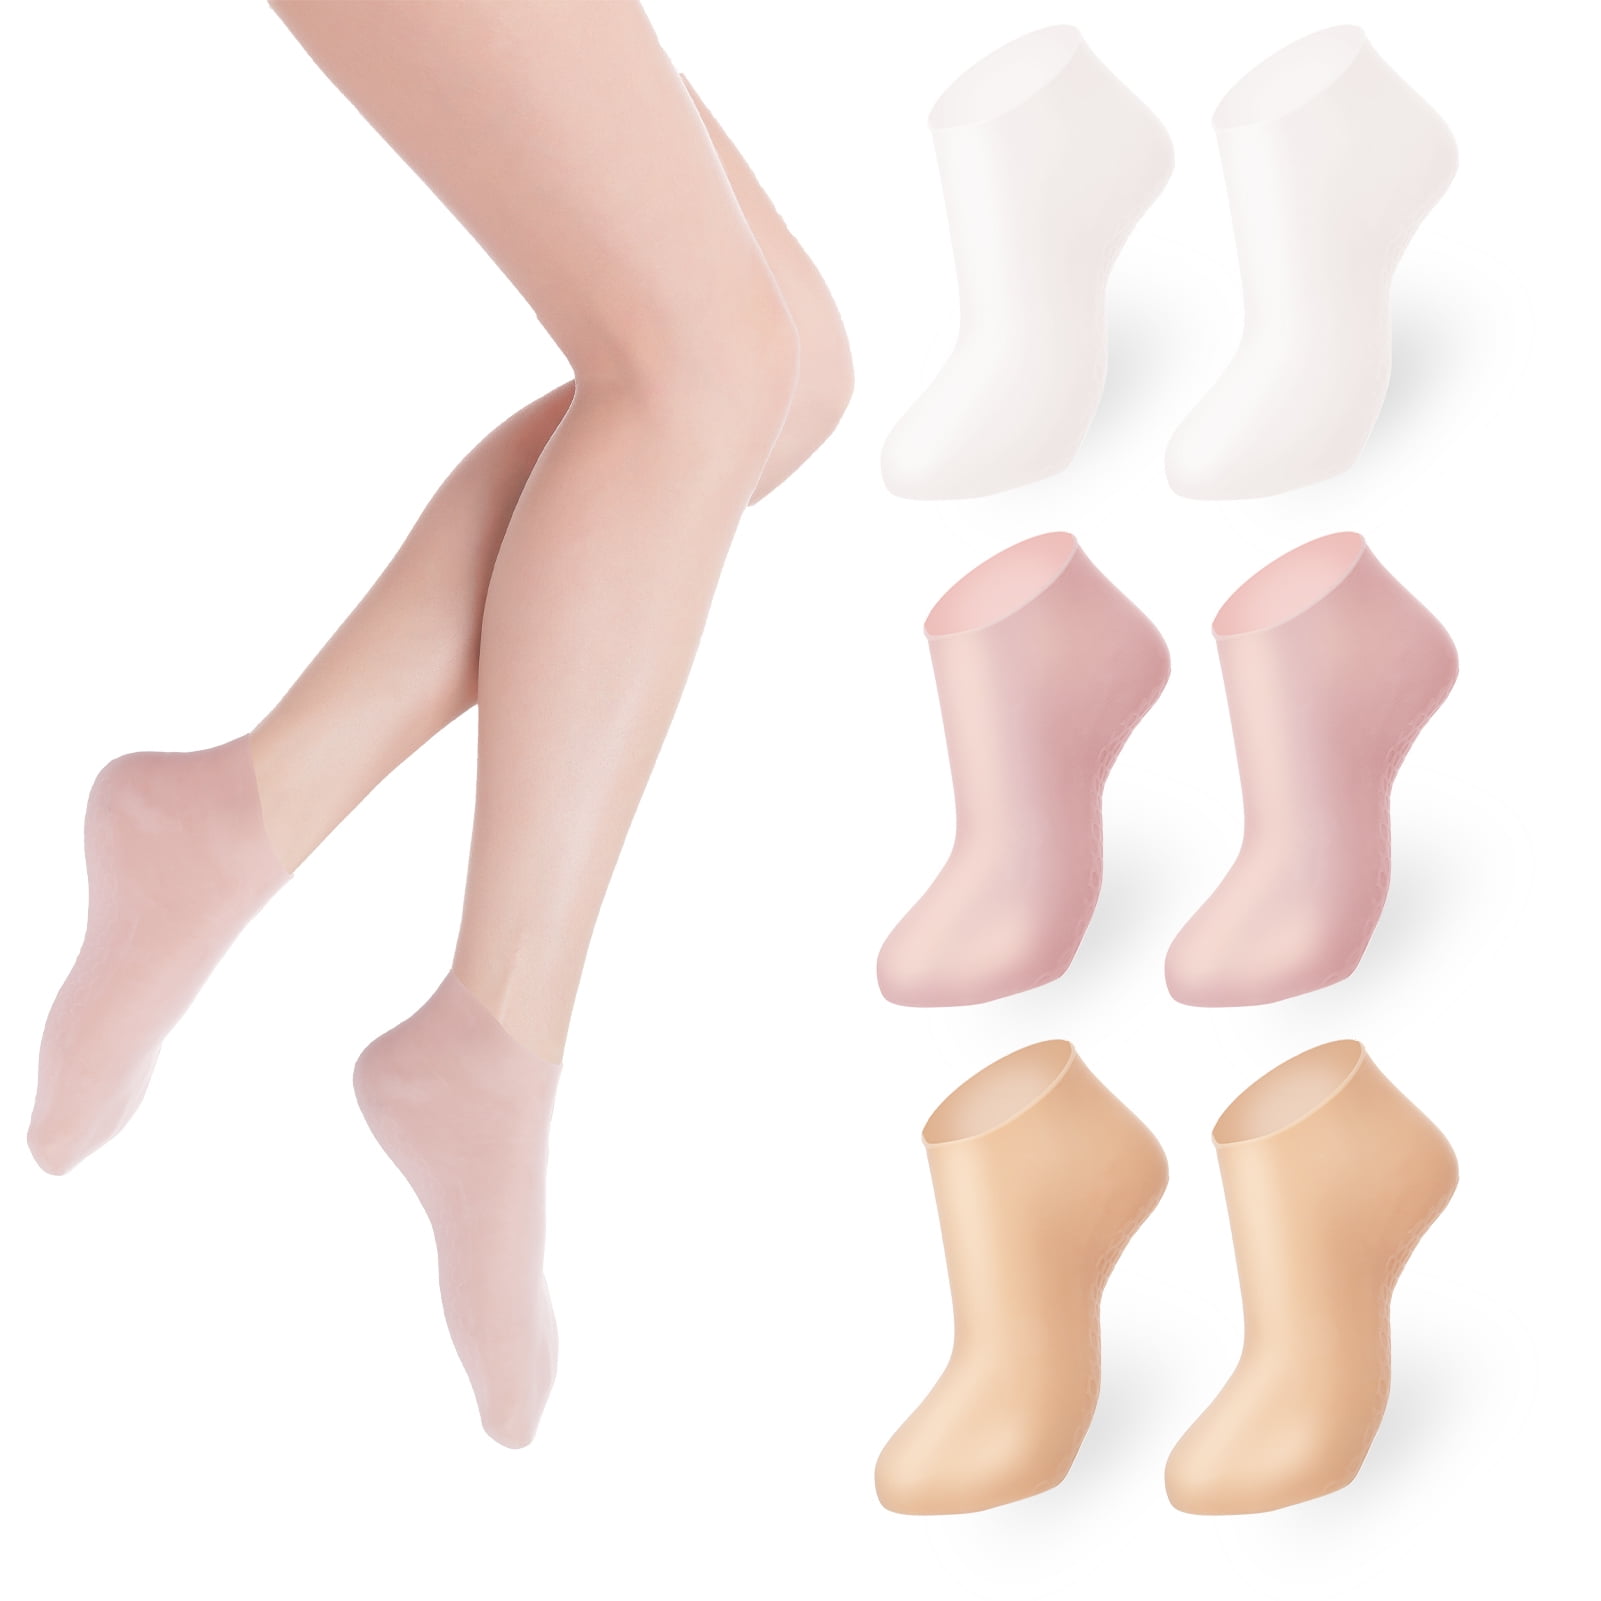 ITPCINC - 4 Pairs Moisturizing Socks, Silicone Socks for Women Men,  Non-Slip Soft Silicone Socks for Repairing Dry Feet, Cracked Heel and  Softening